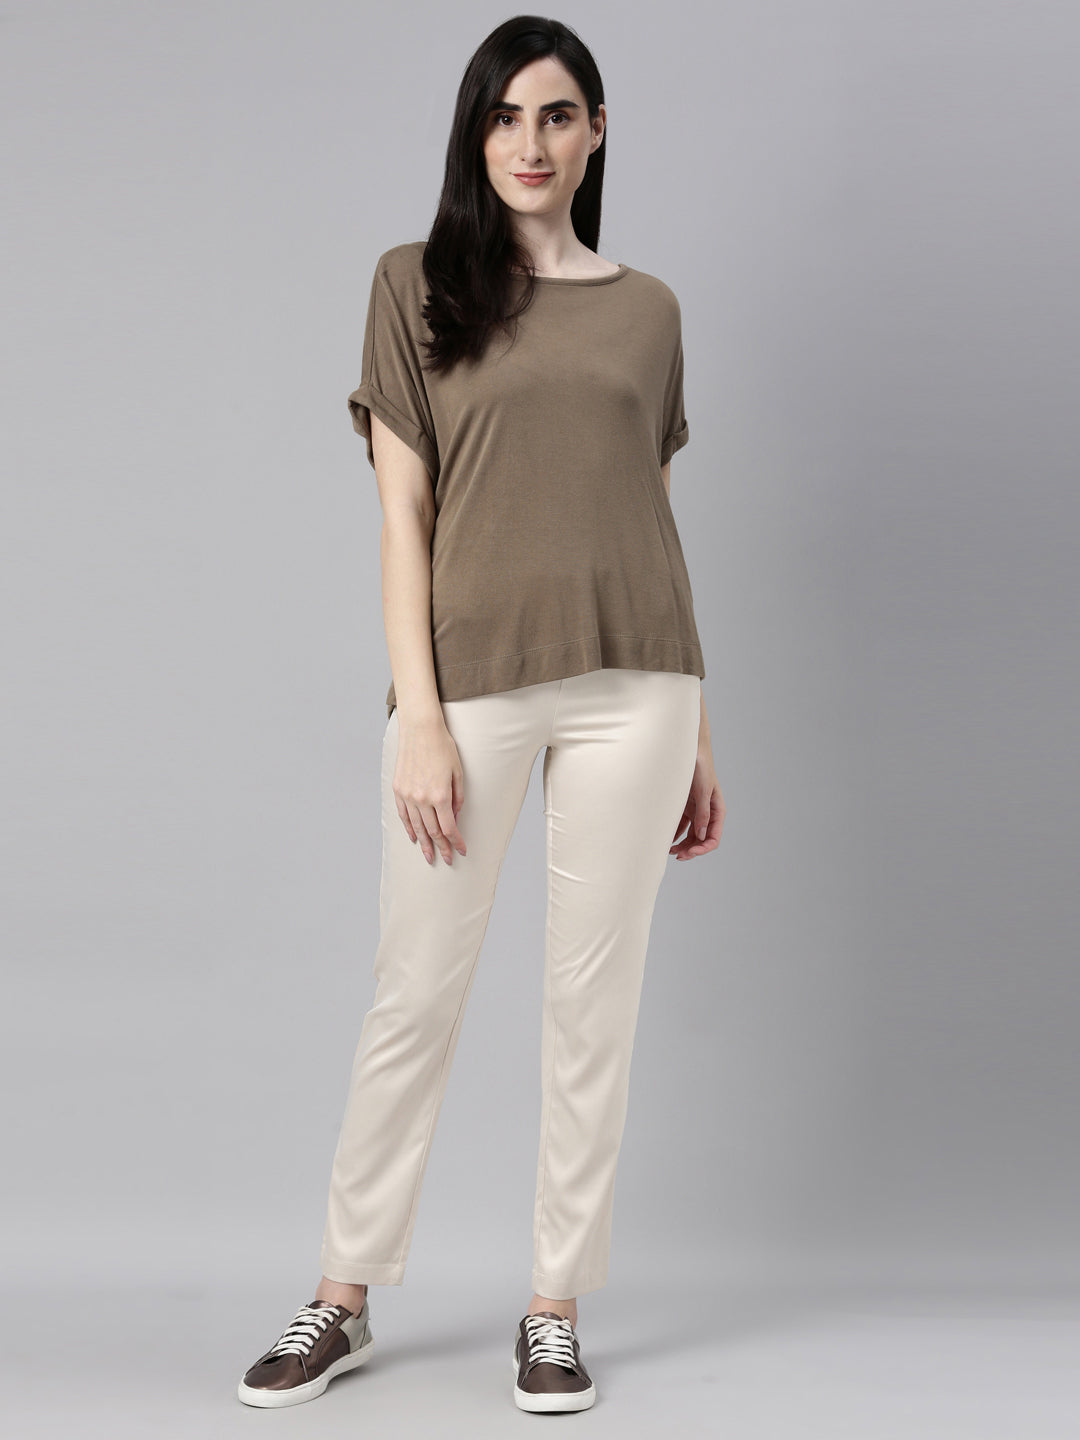 Buy SOJANYA Beige Cotton Regular Slim Fit Checks Flat Front Trousers for  Mens Online @ Tata CLiQ